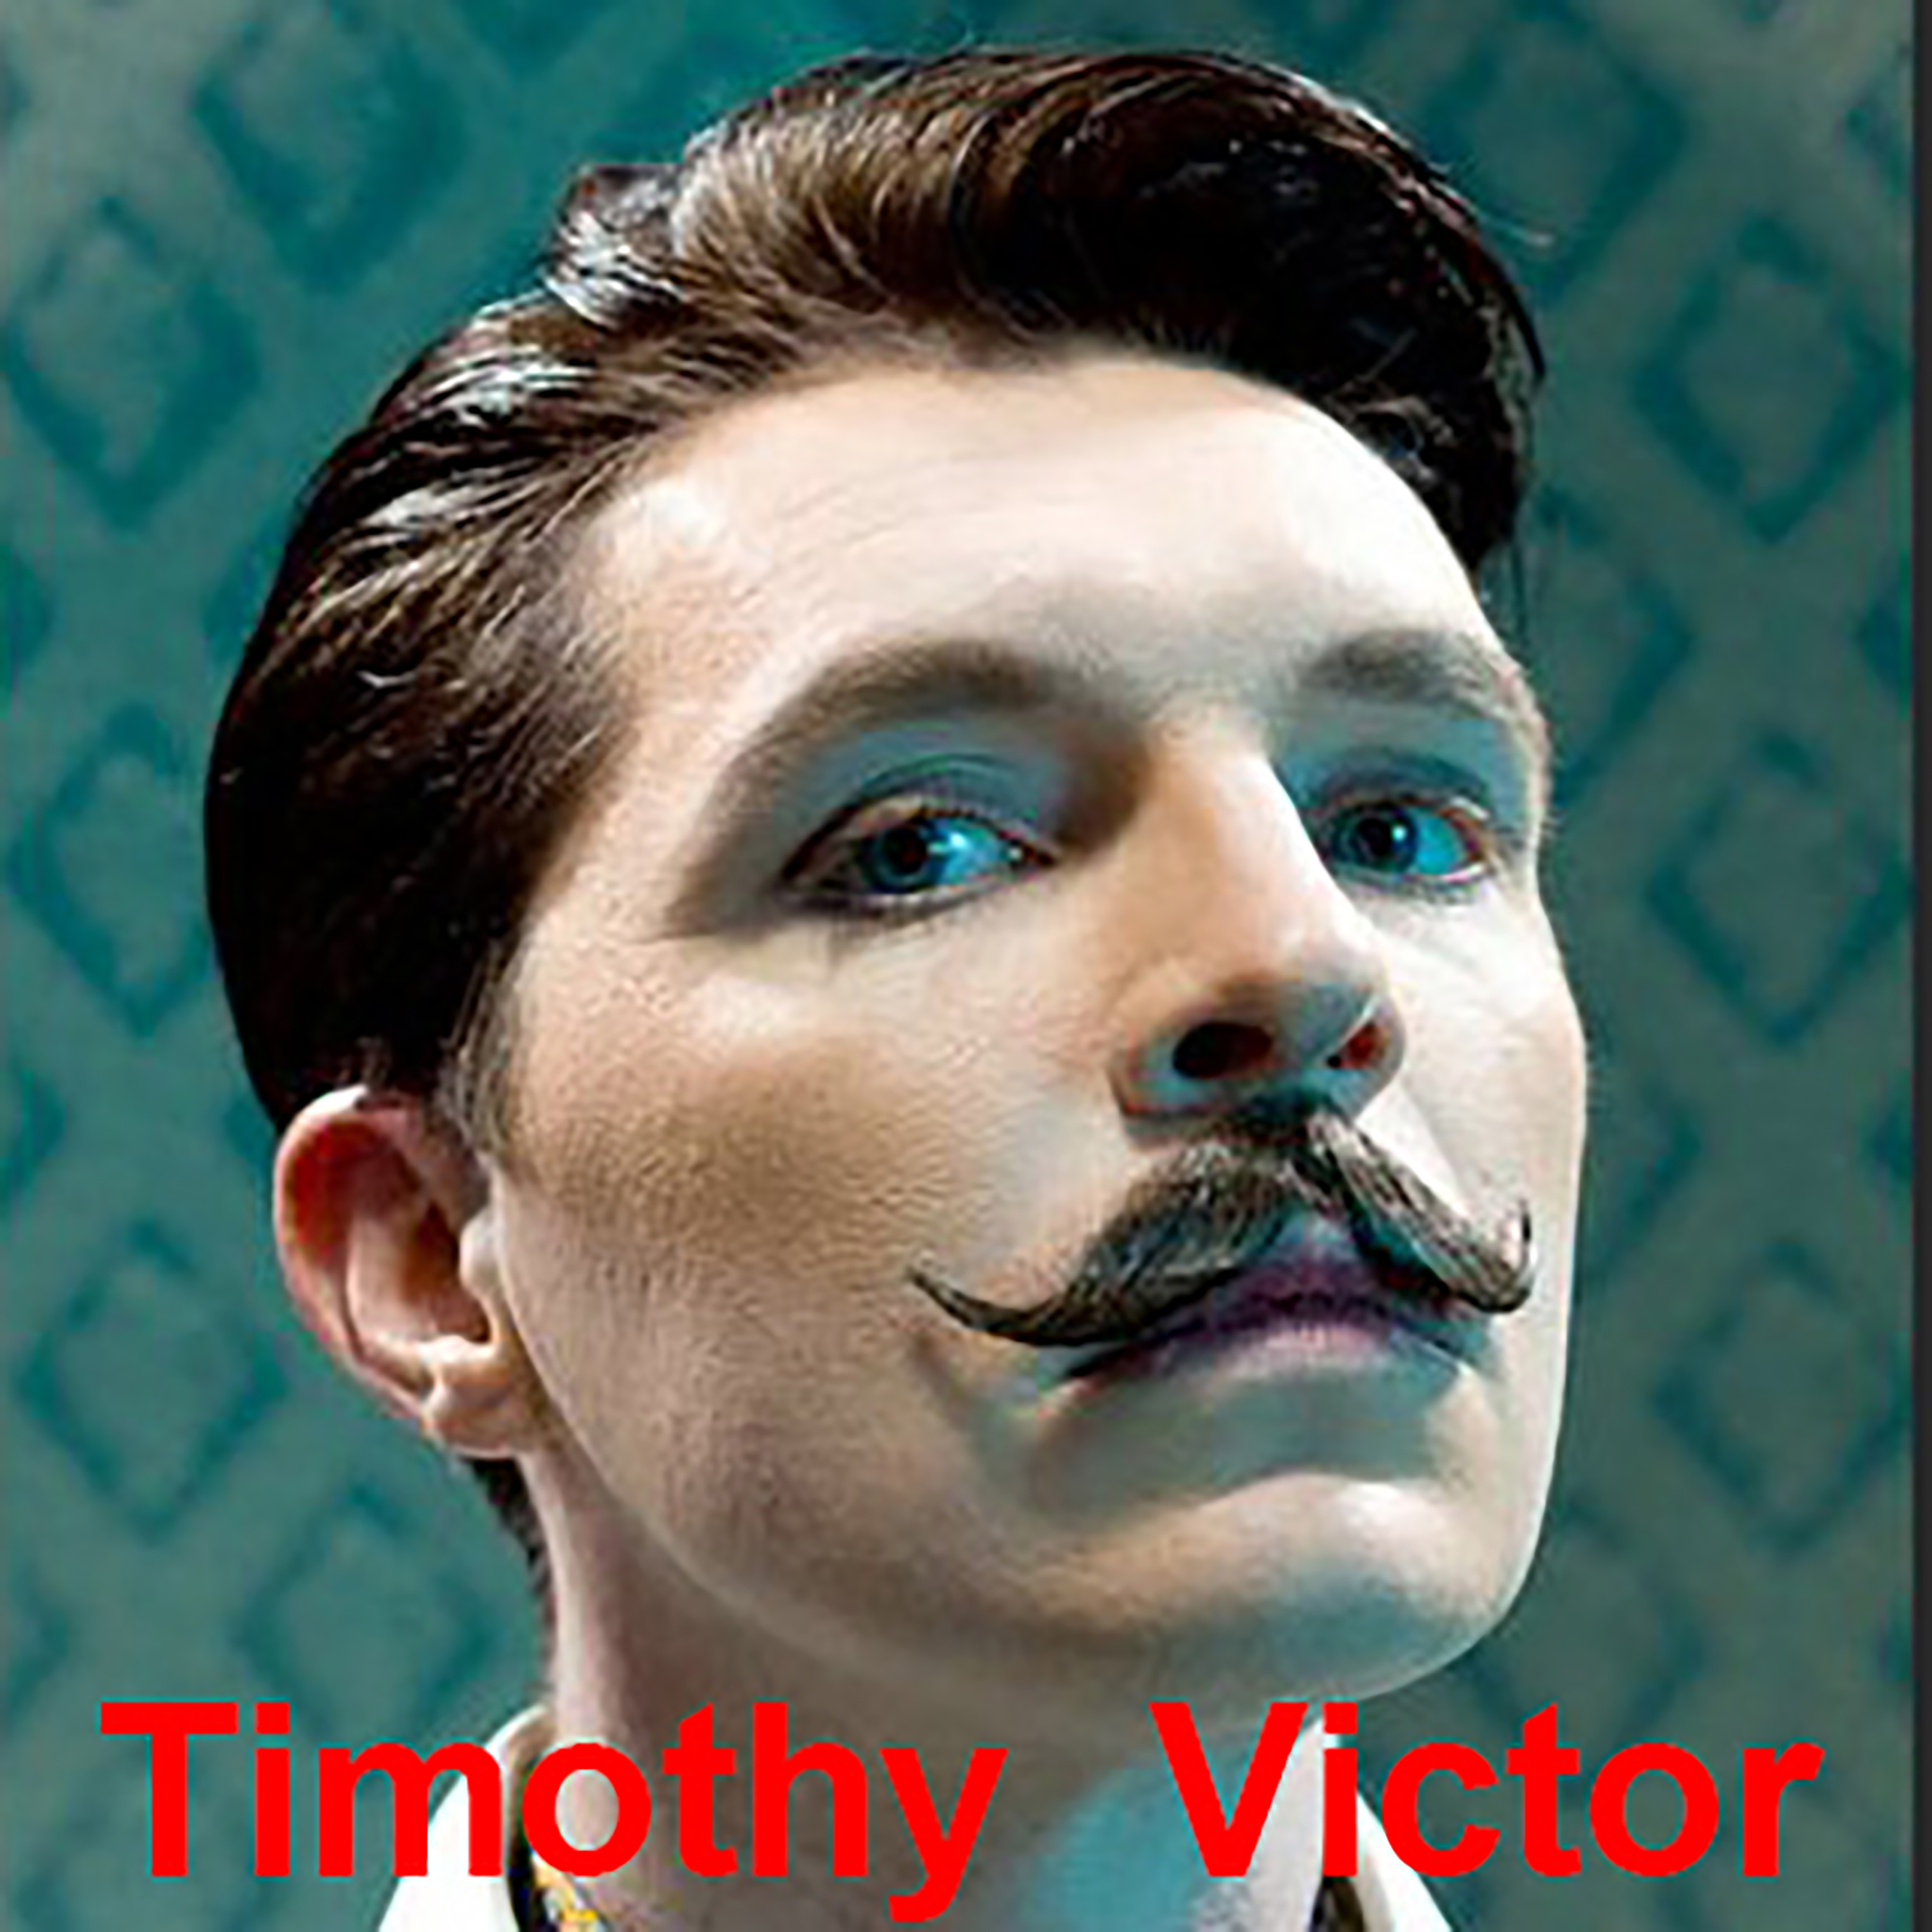 Timothy Victor